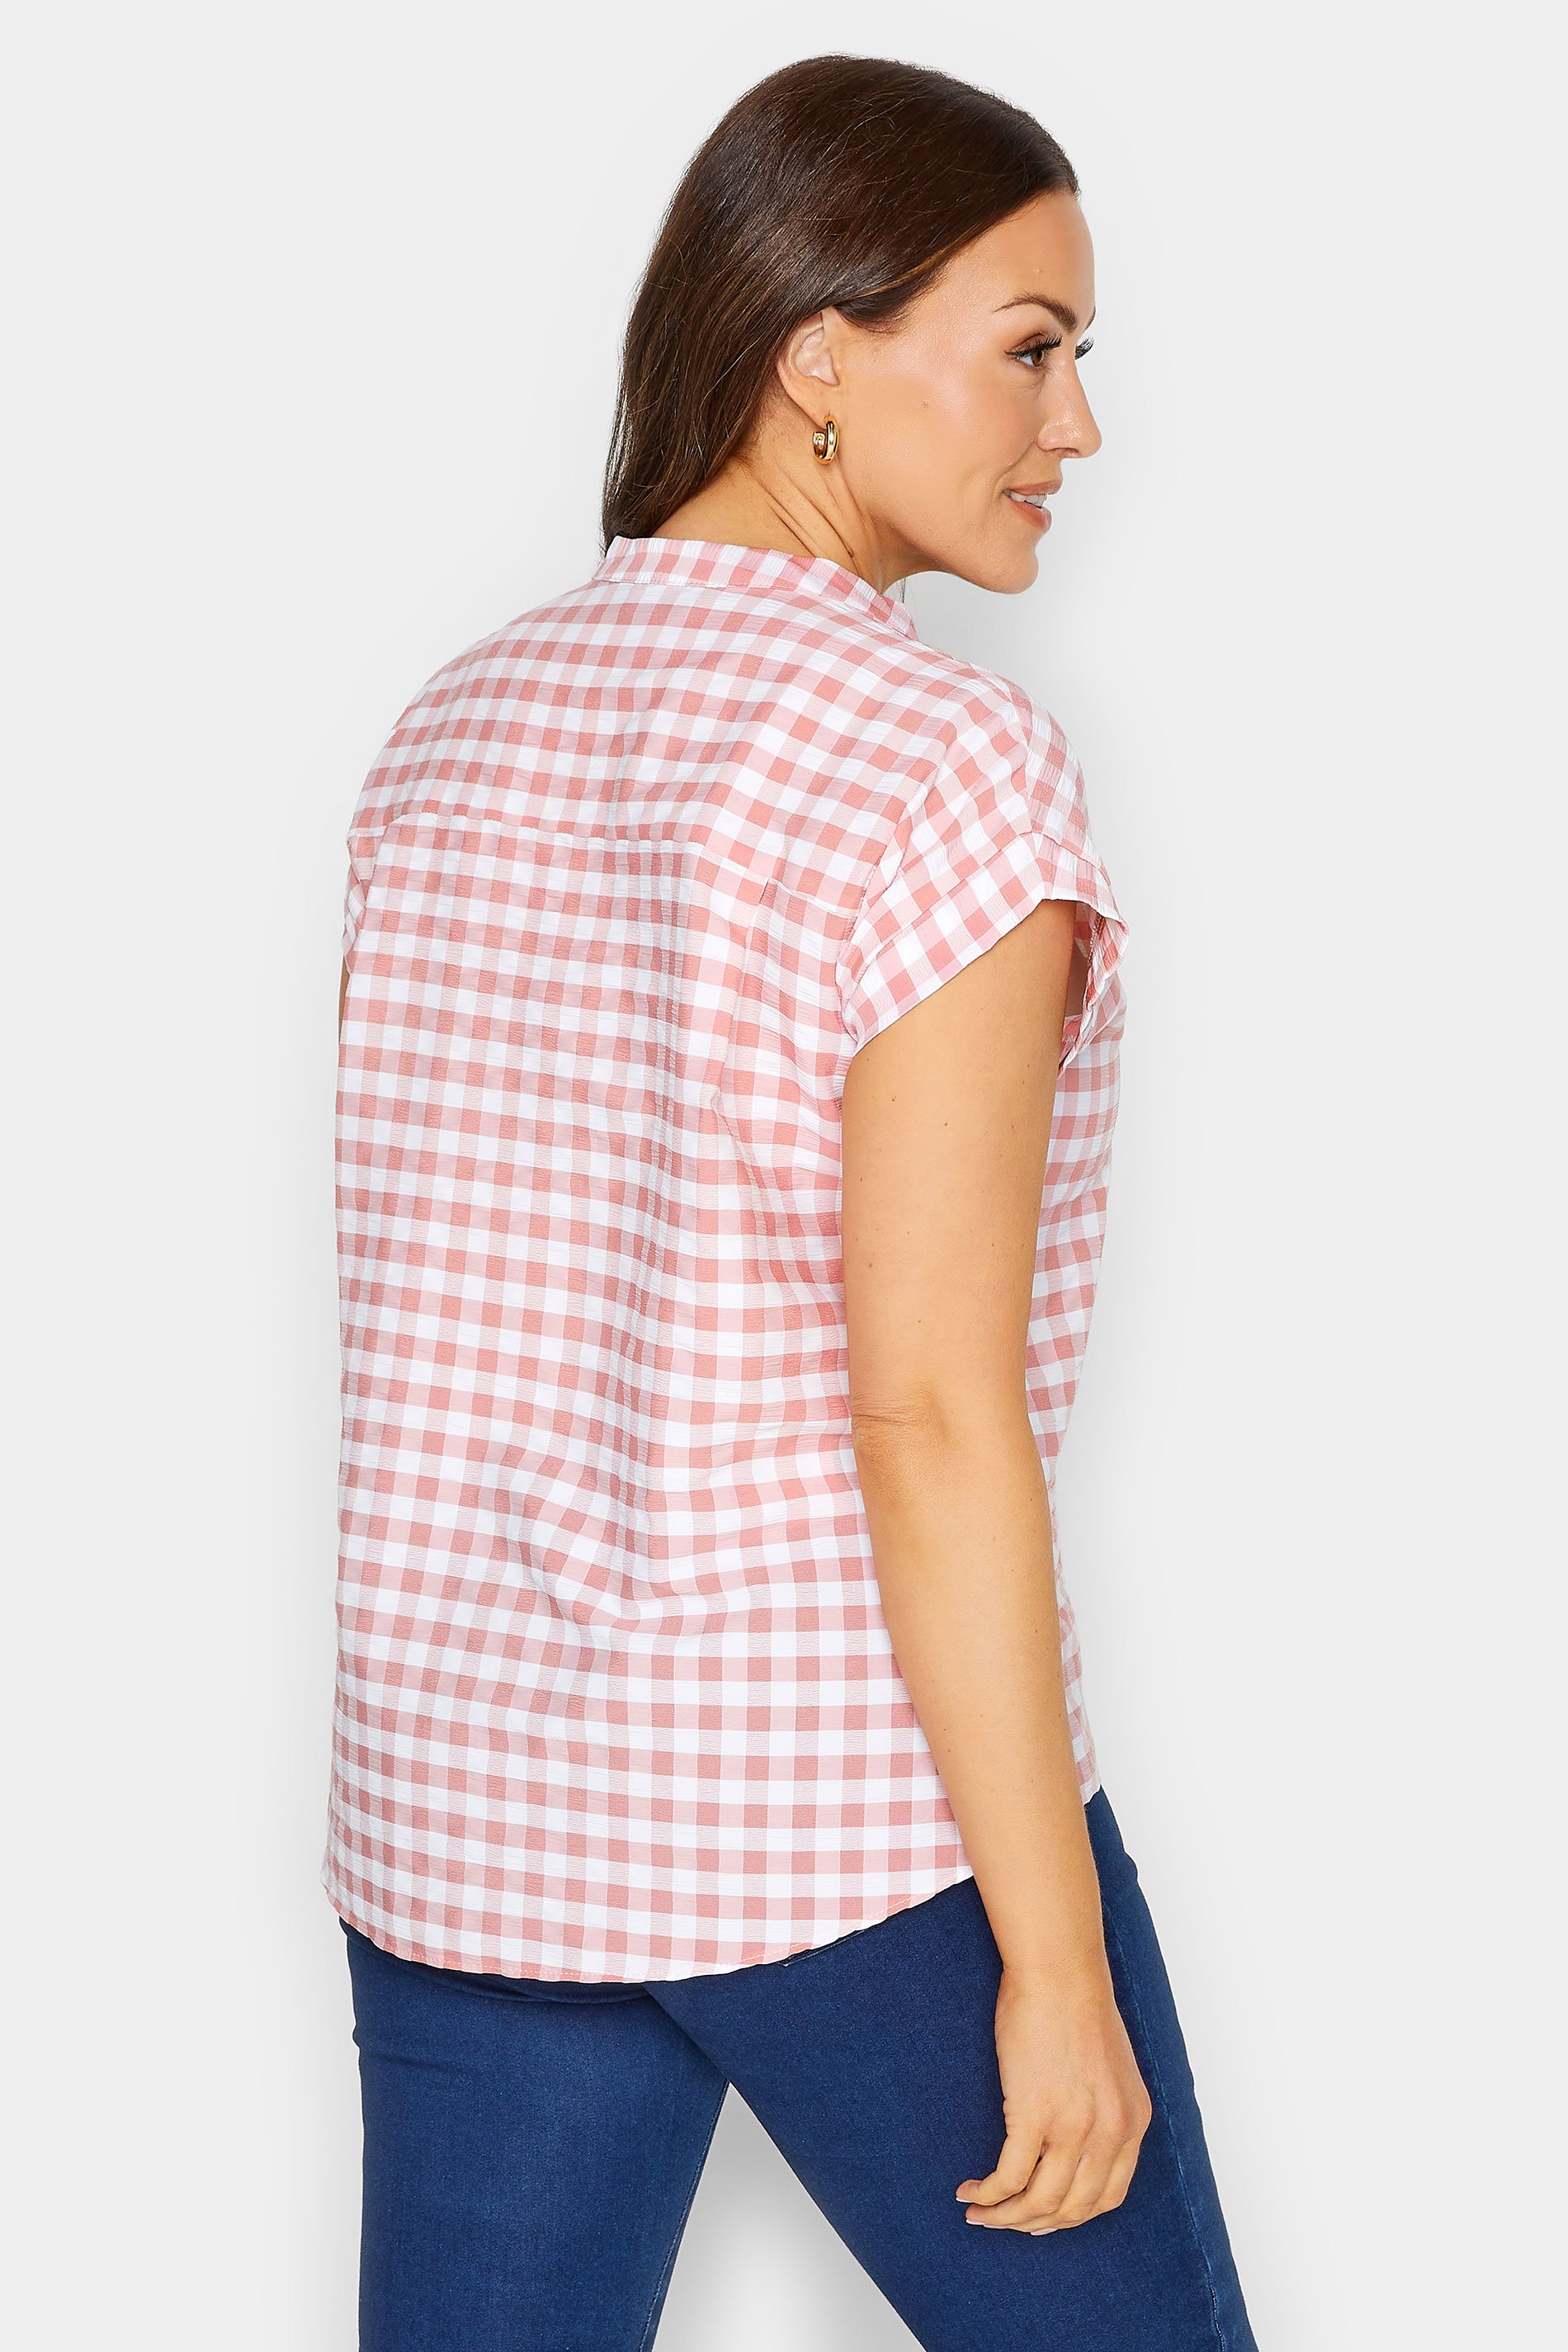 M&Co Pink Gingham Short Sleeve Shirt | M&Co 3